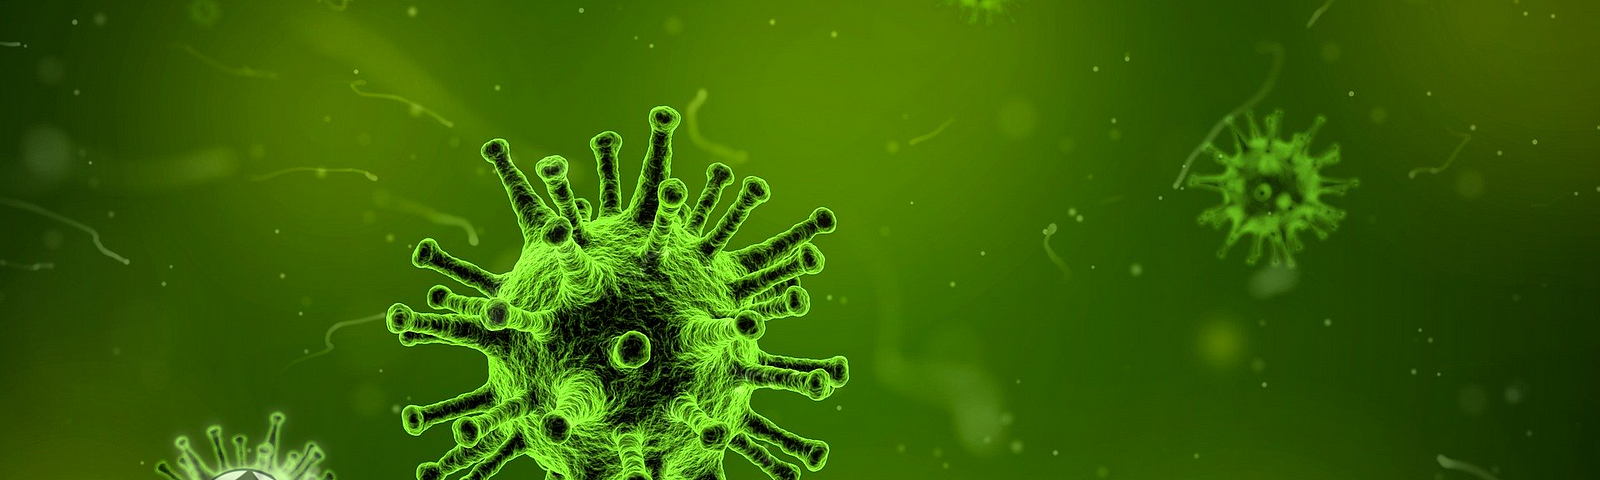 covid-19 coronavirus image with politicalcolumn.net logo